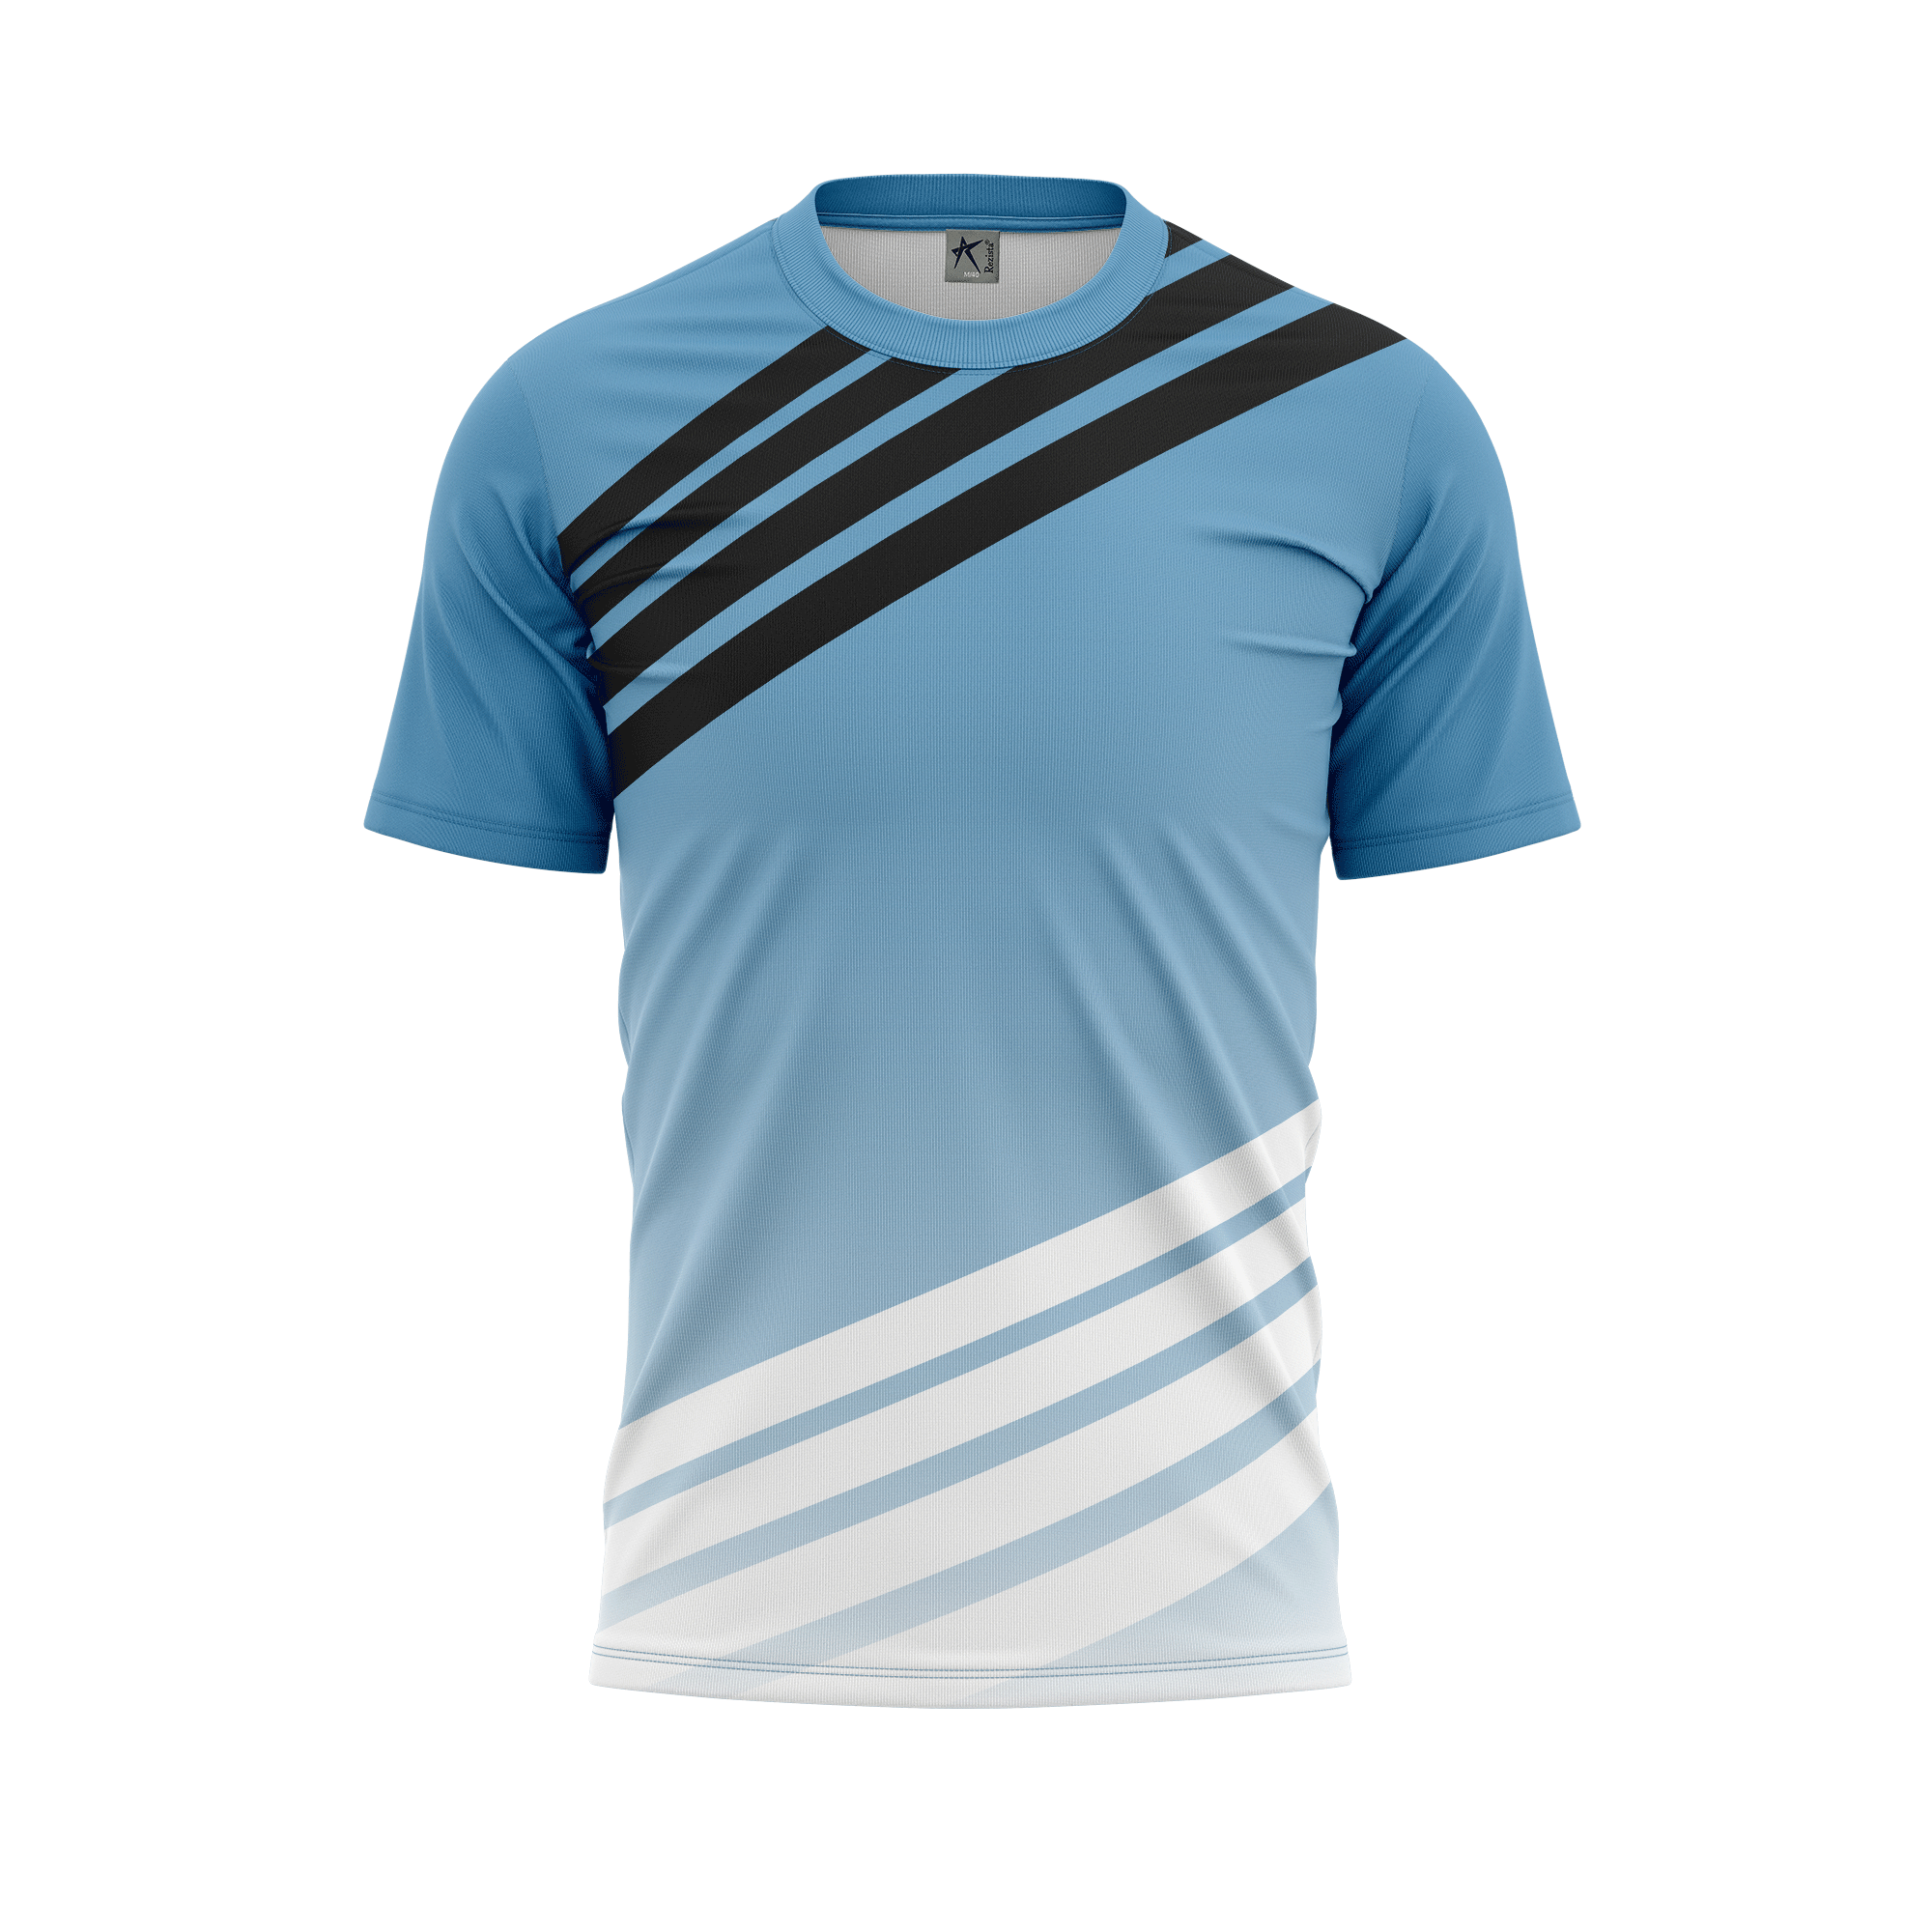 Rezista Customized Jersey - Sub Design-S.Blue-11 | Customized T-shirts ...